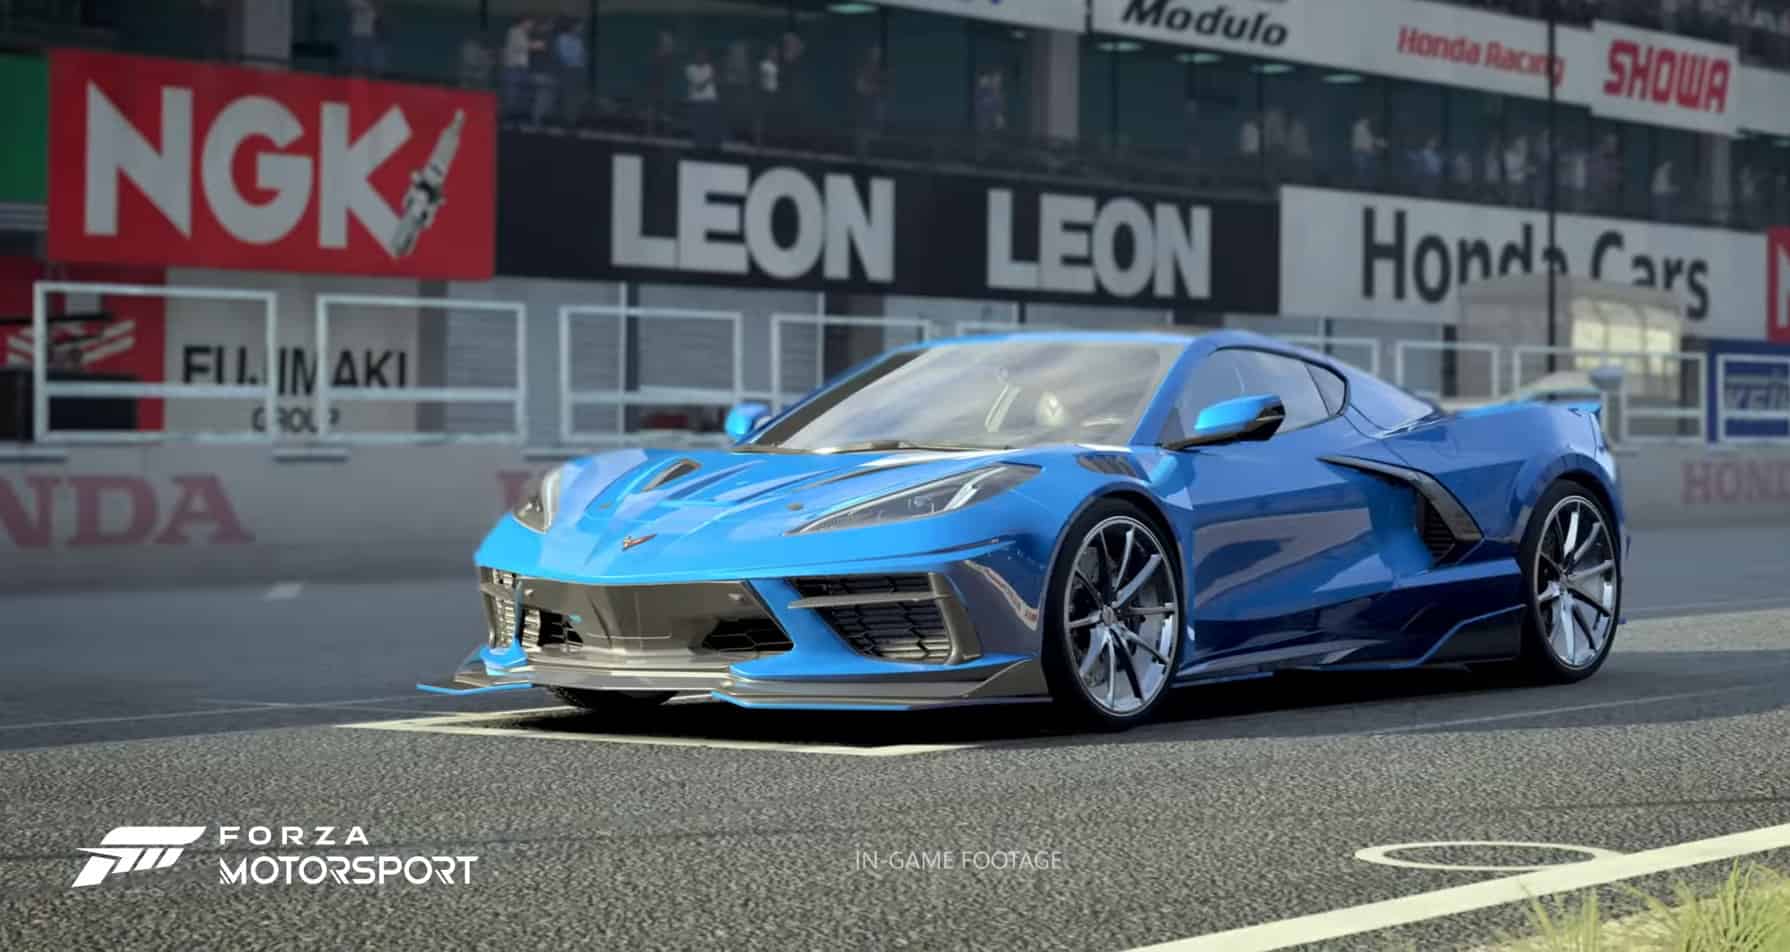 Forza Motorsport: confira os requisitos mínimos e recomendados